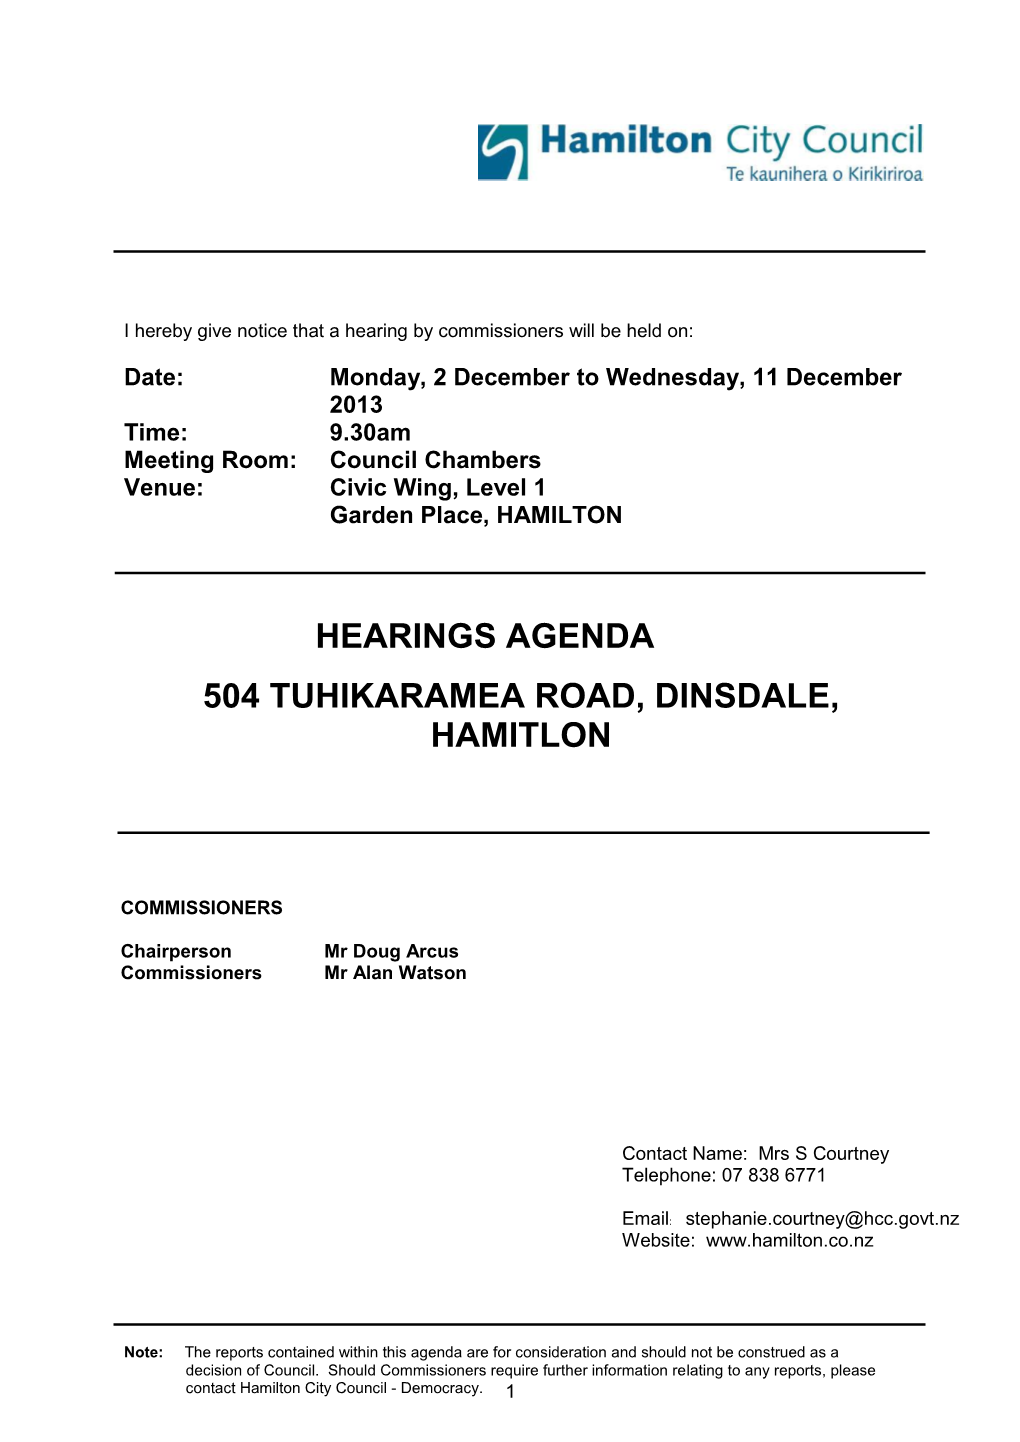 Hearings Agenda 504 Tuhikaramea Road, Dinsdale, Hamitlon